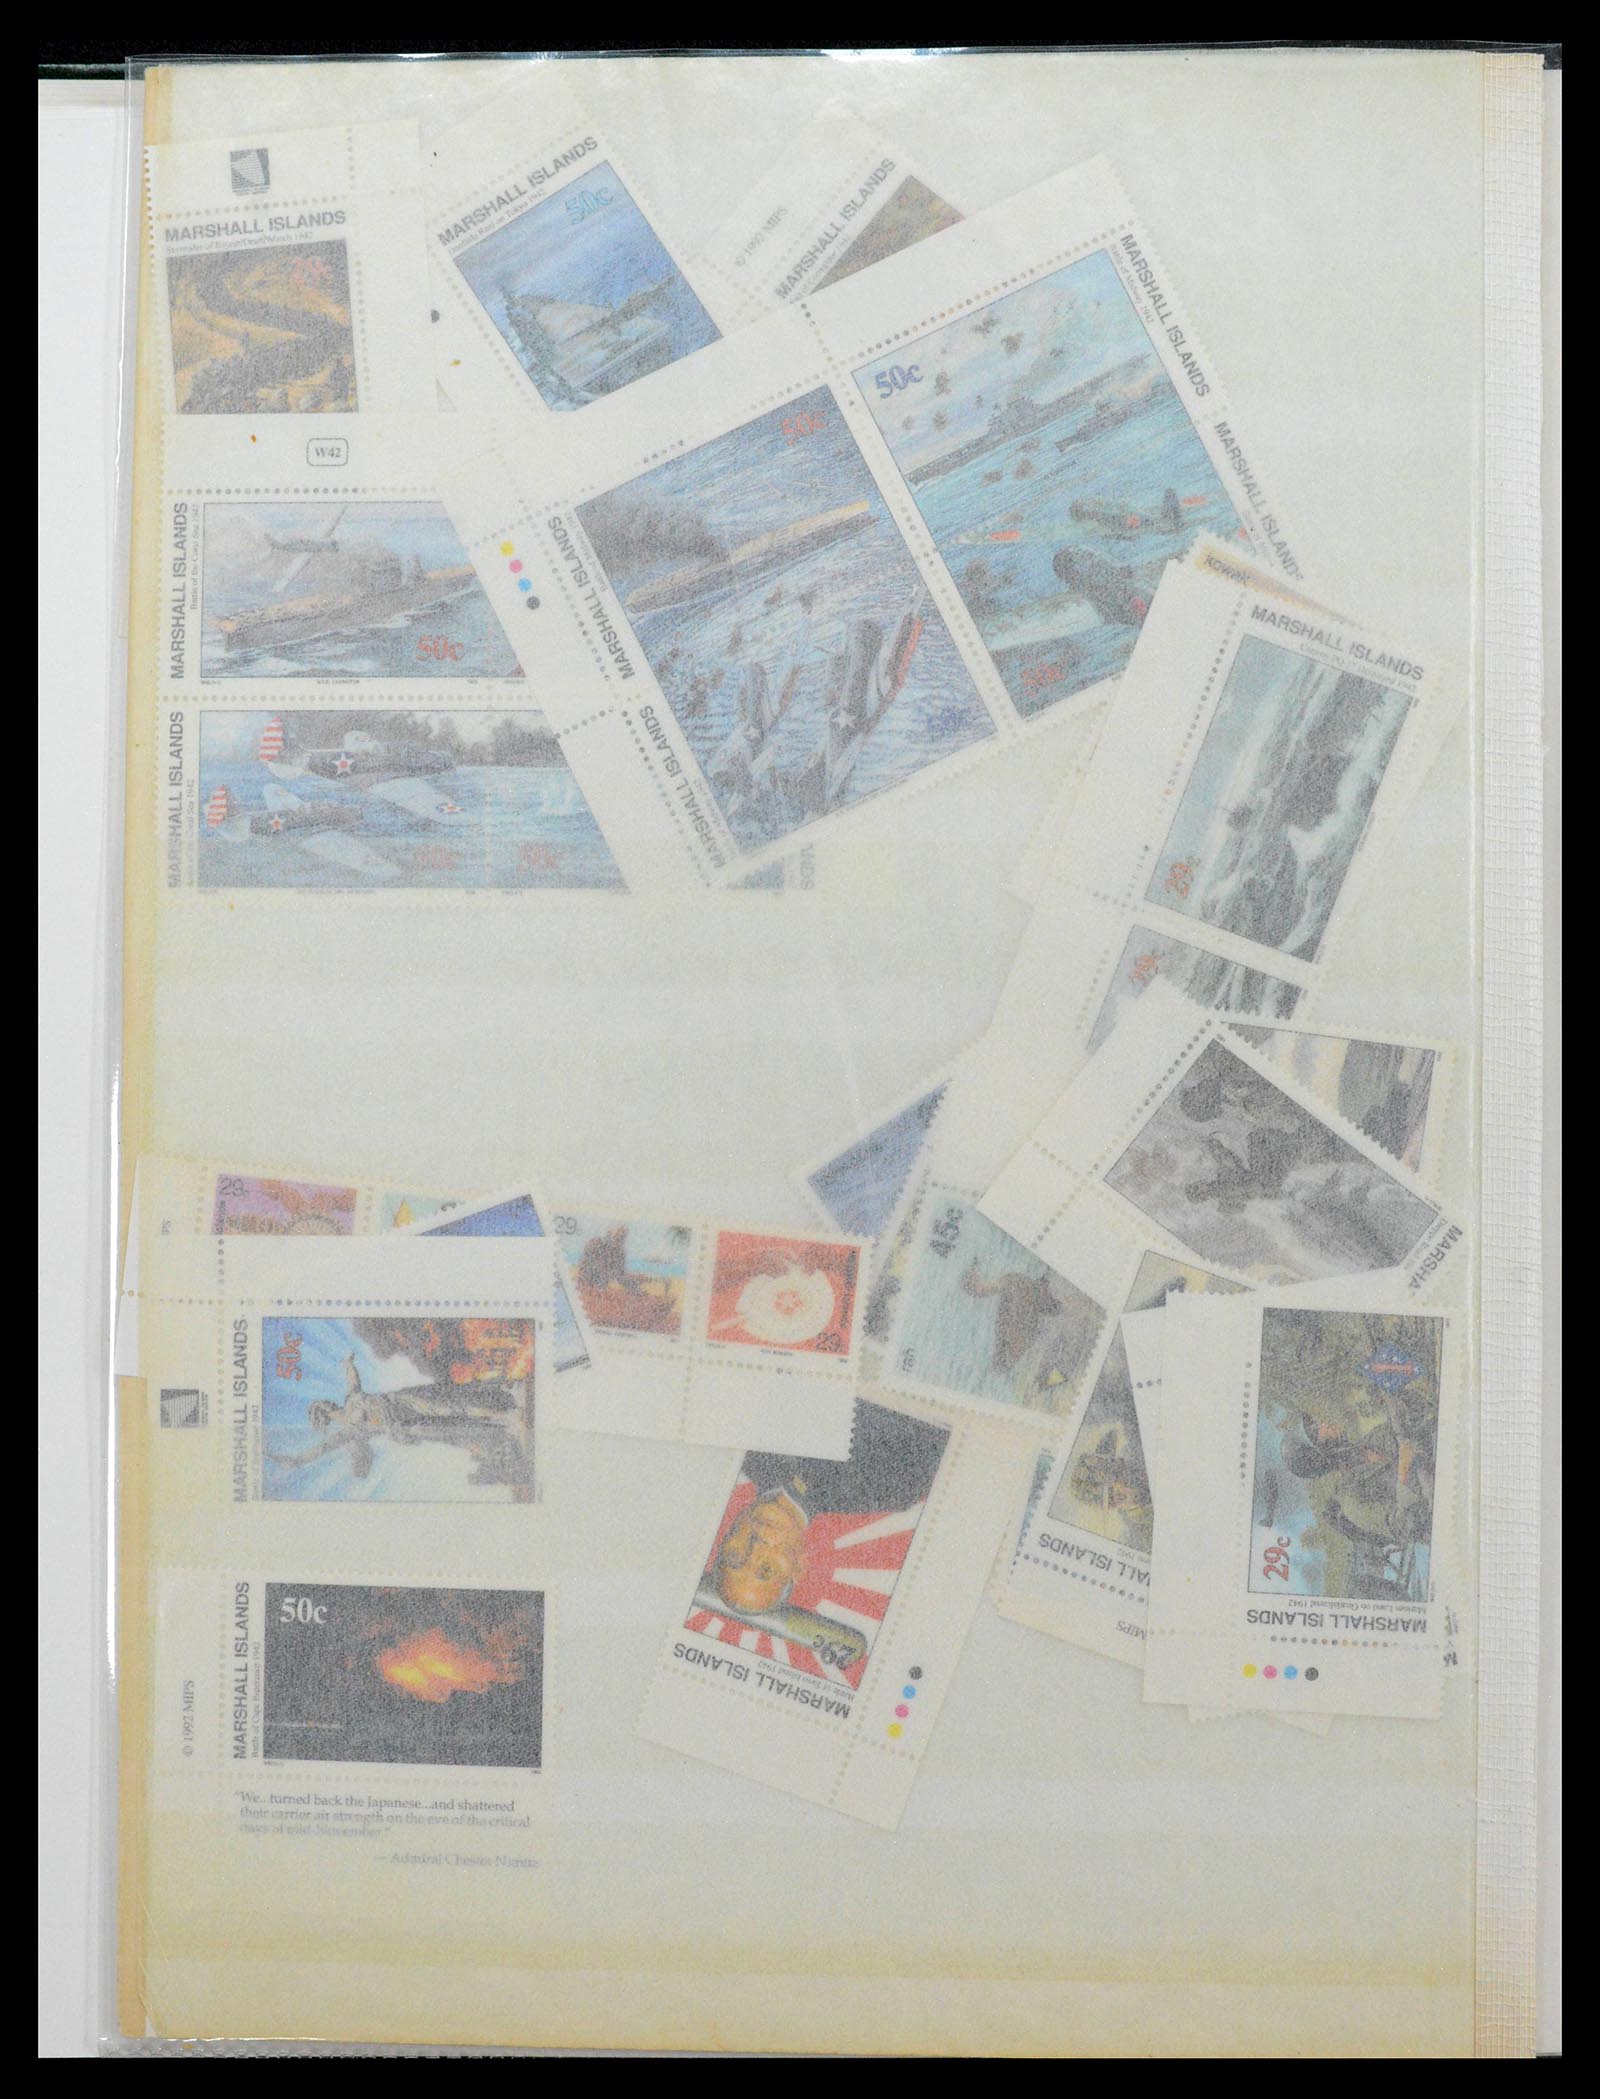 39222 0160 - Stamp collection 39222 Palau, Micronesia and Marshall islands 1980-1995.